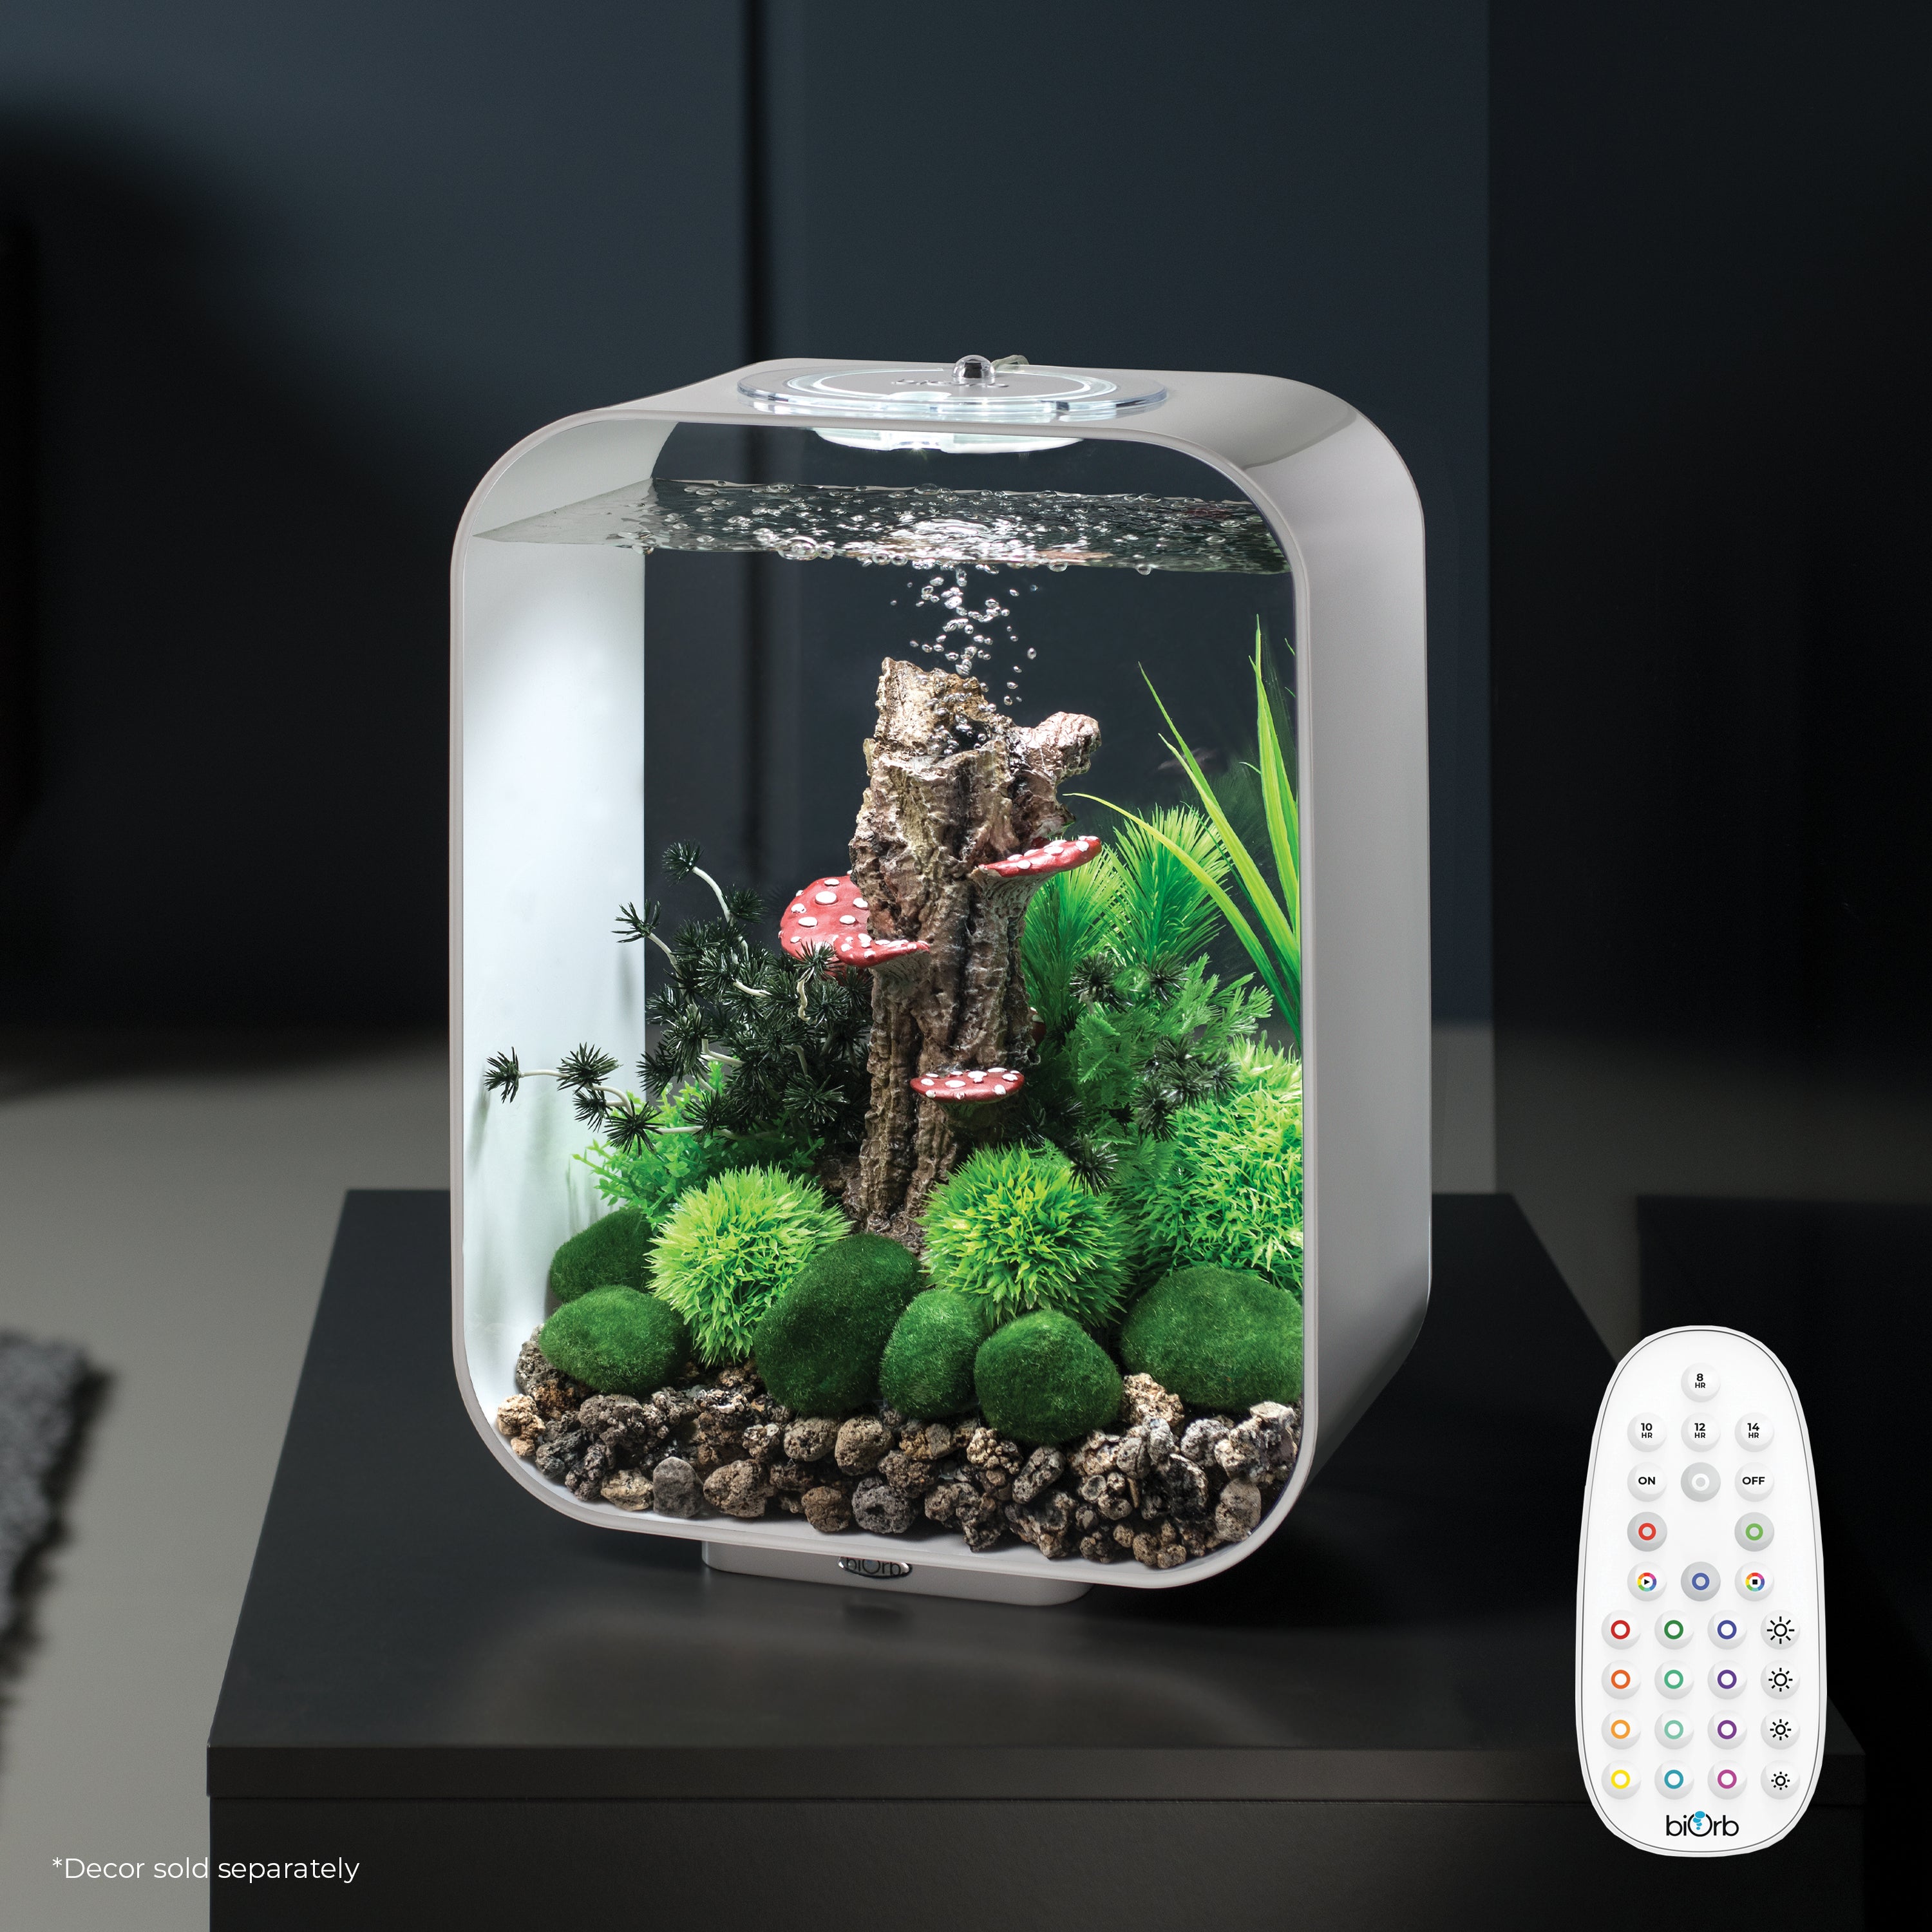 Get inspiration for your aquarium LIFE 15 Aquarium with MCR Light - 4 gallon available in white